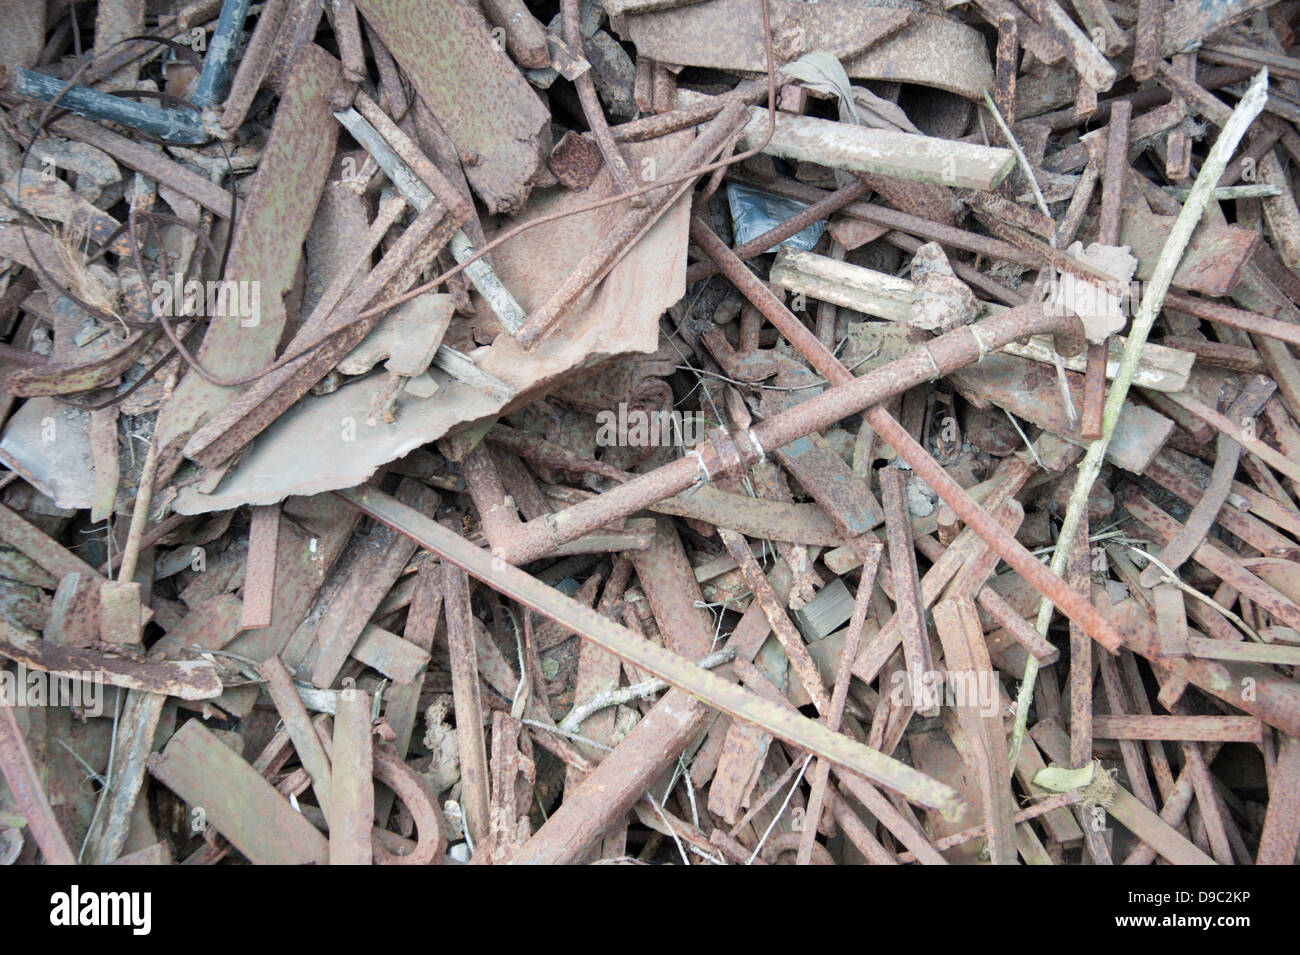 Scrap Rusted Iron Pipe Stock Photo